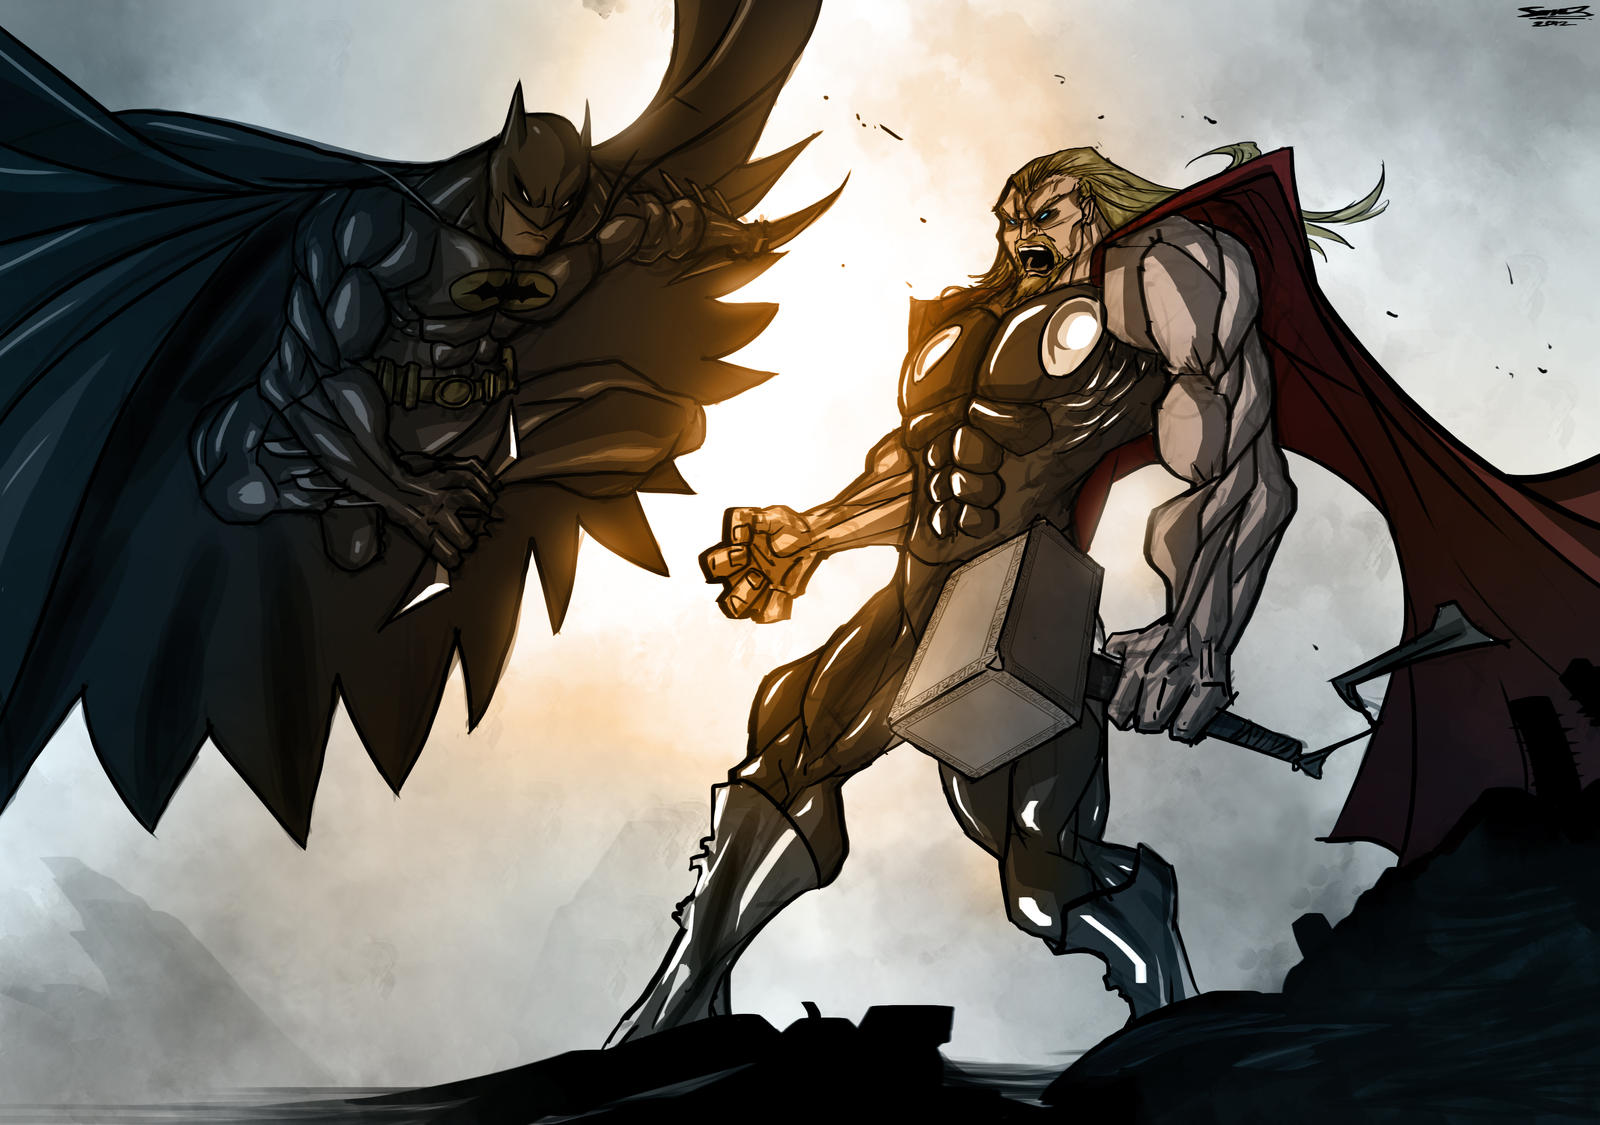 Thor Vs. Batman by TheRisingSoul on DeviantArt